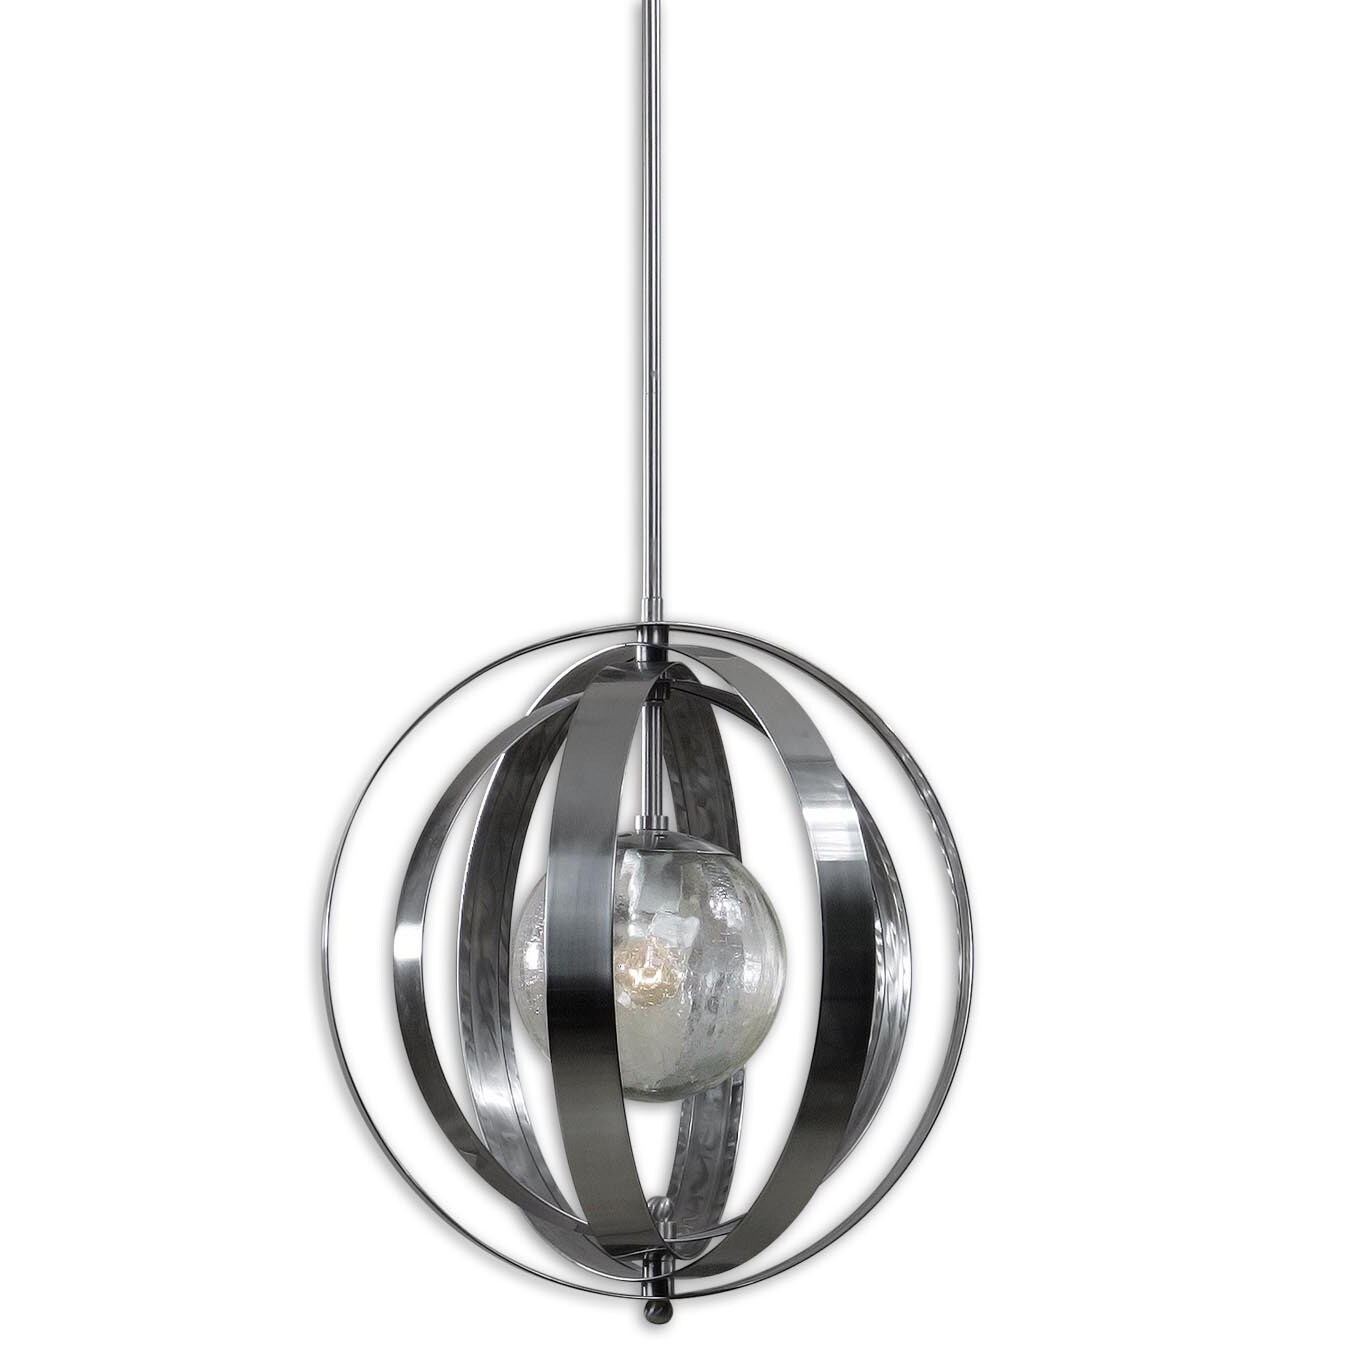 Trofarello Silver 1 light Pendant Metal Glass lighting Fixture